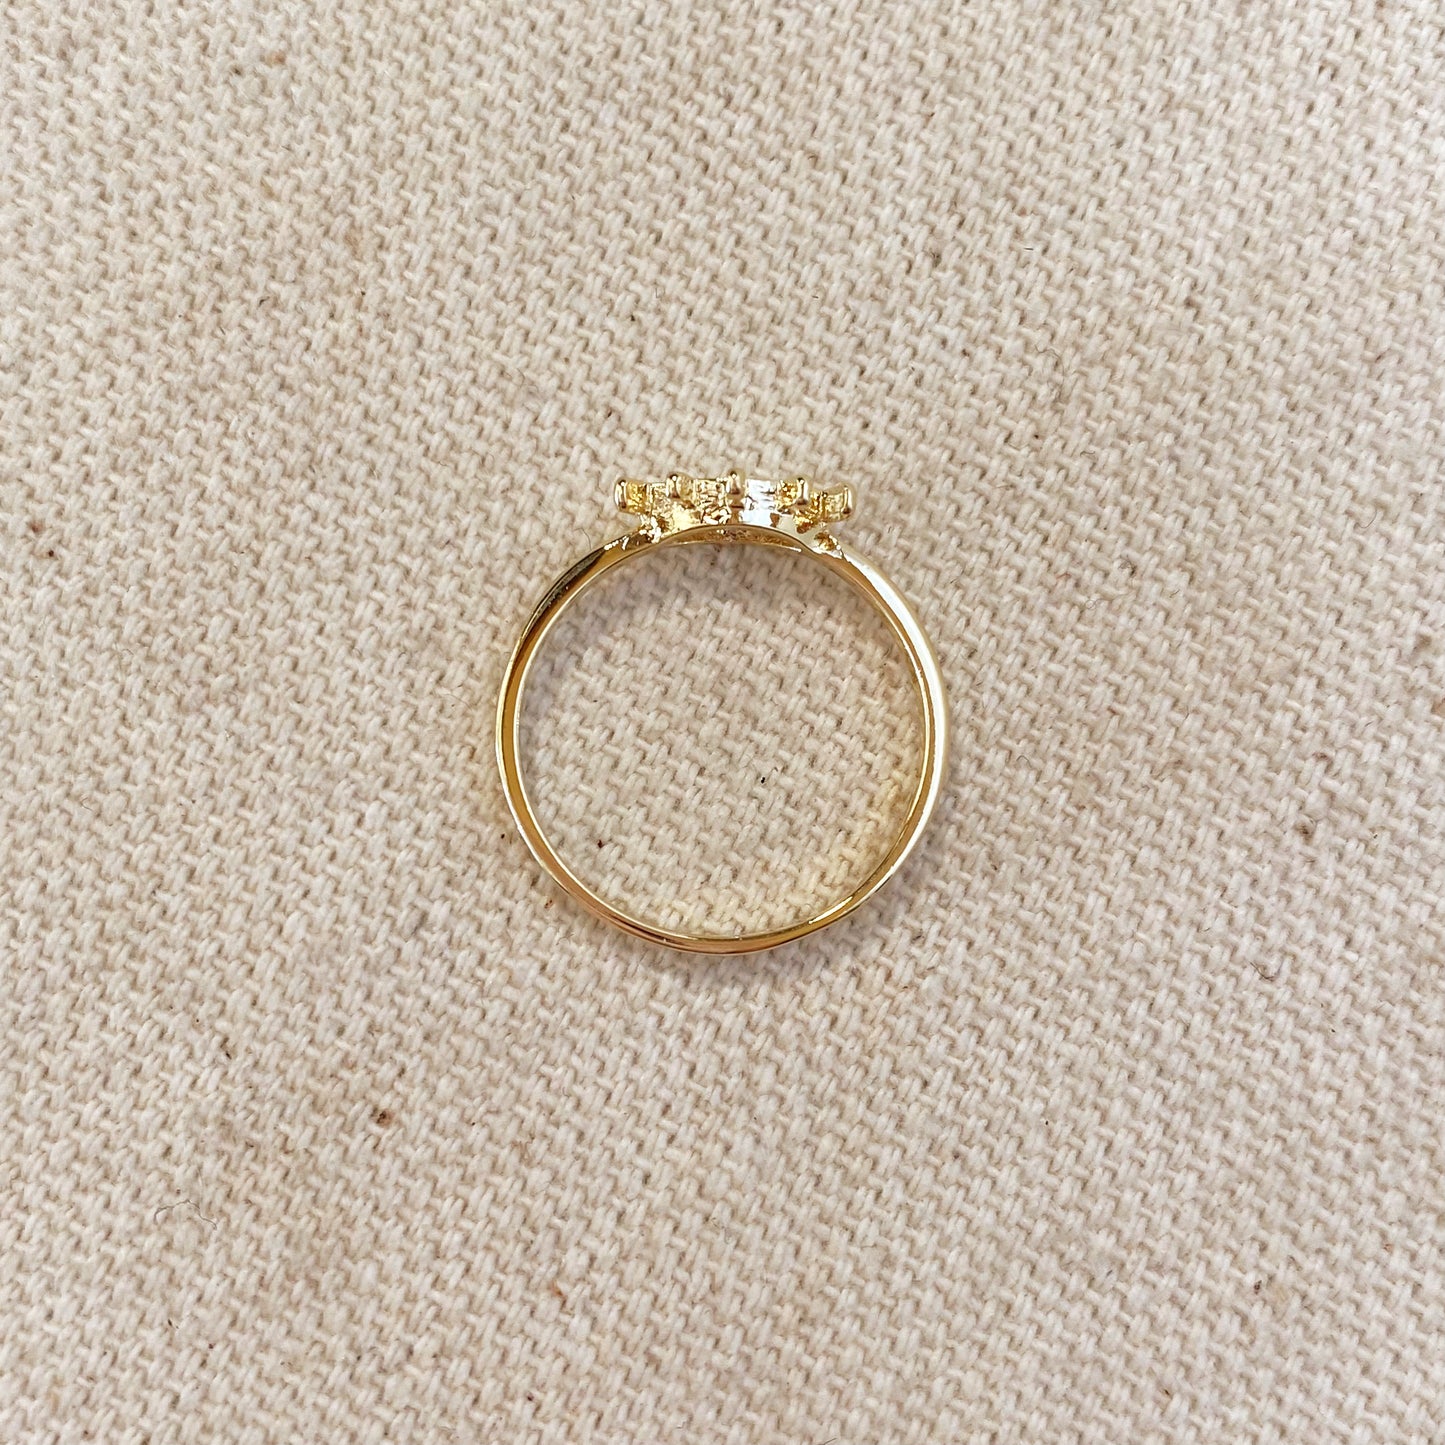 18k Gold Filled Dainty Eye Ring